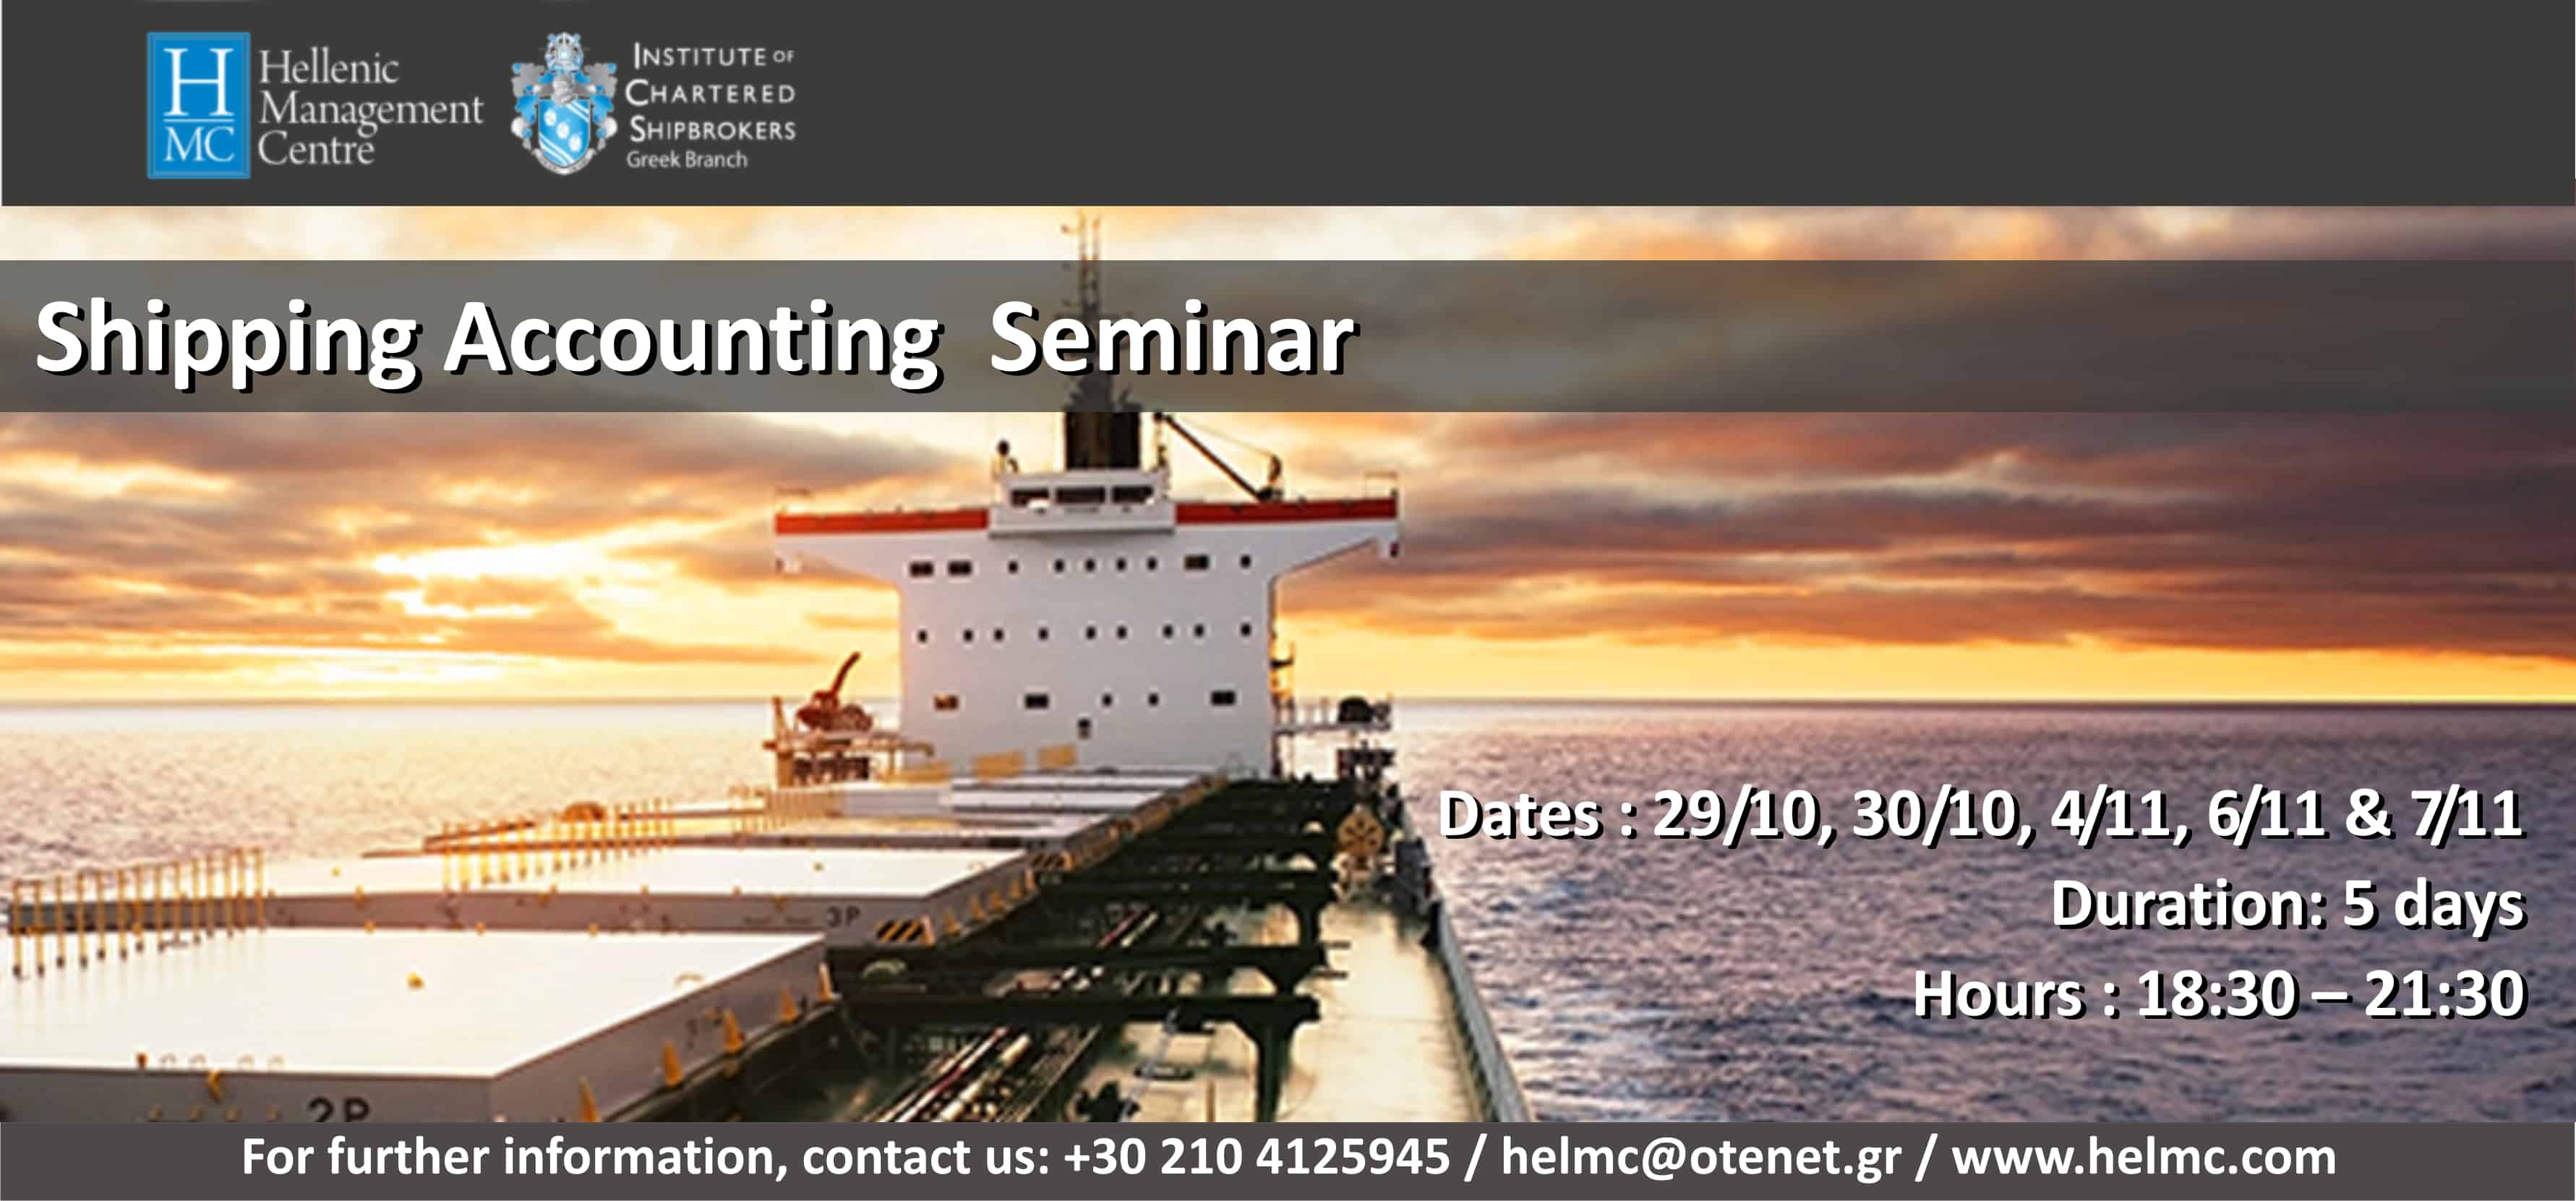 Shipping Accounting Seminar_ΙΜΑΓΕ ΠΡΟΜΟ